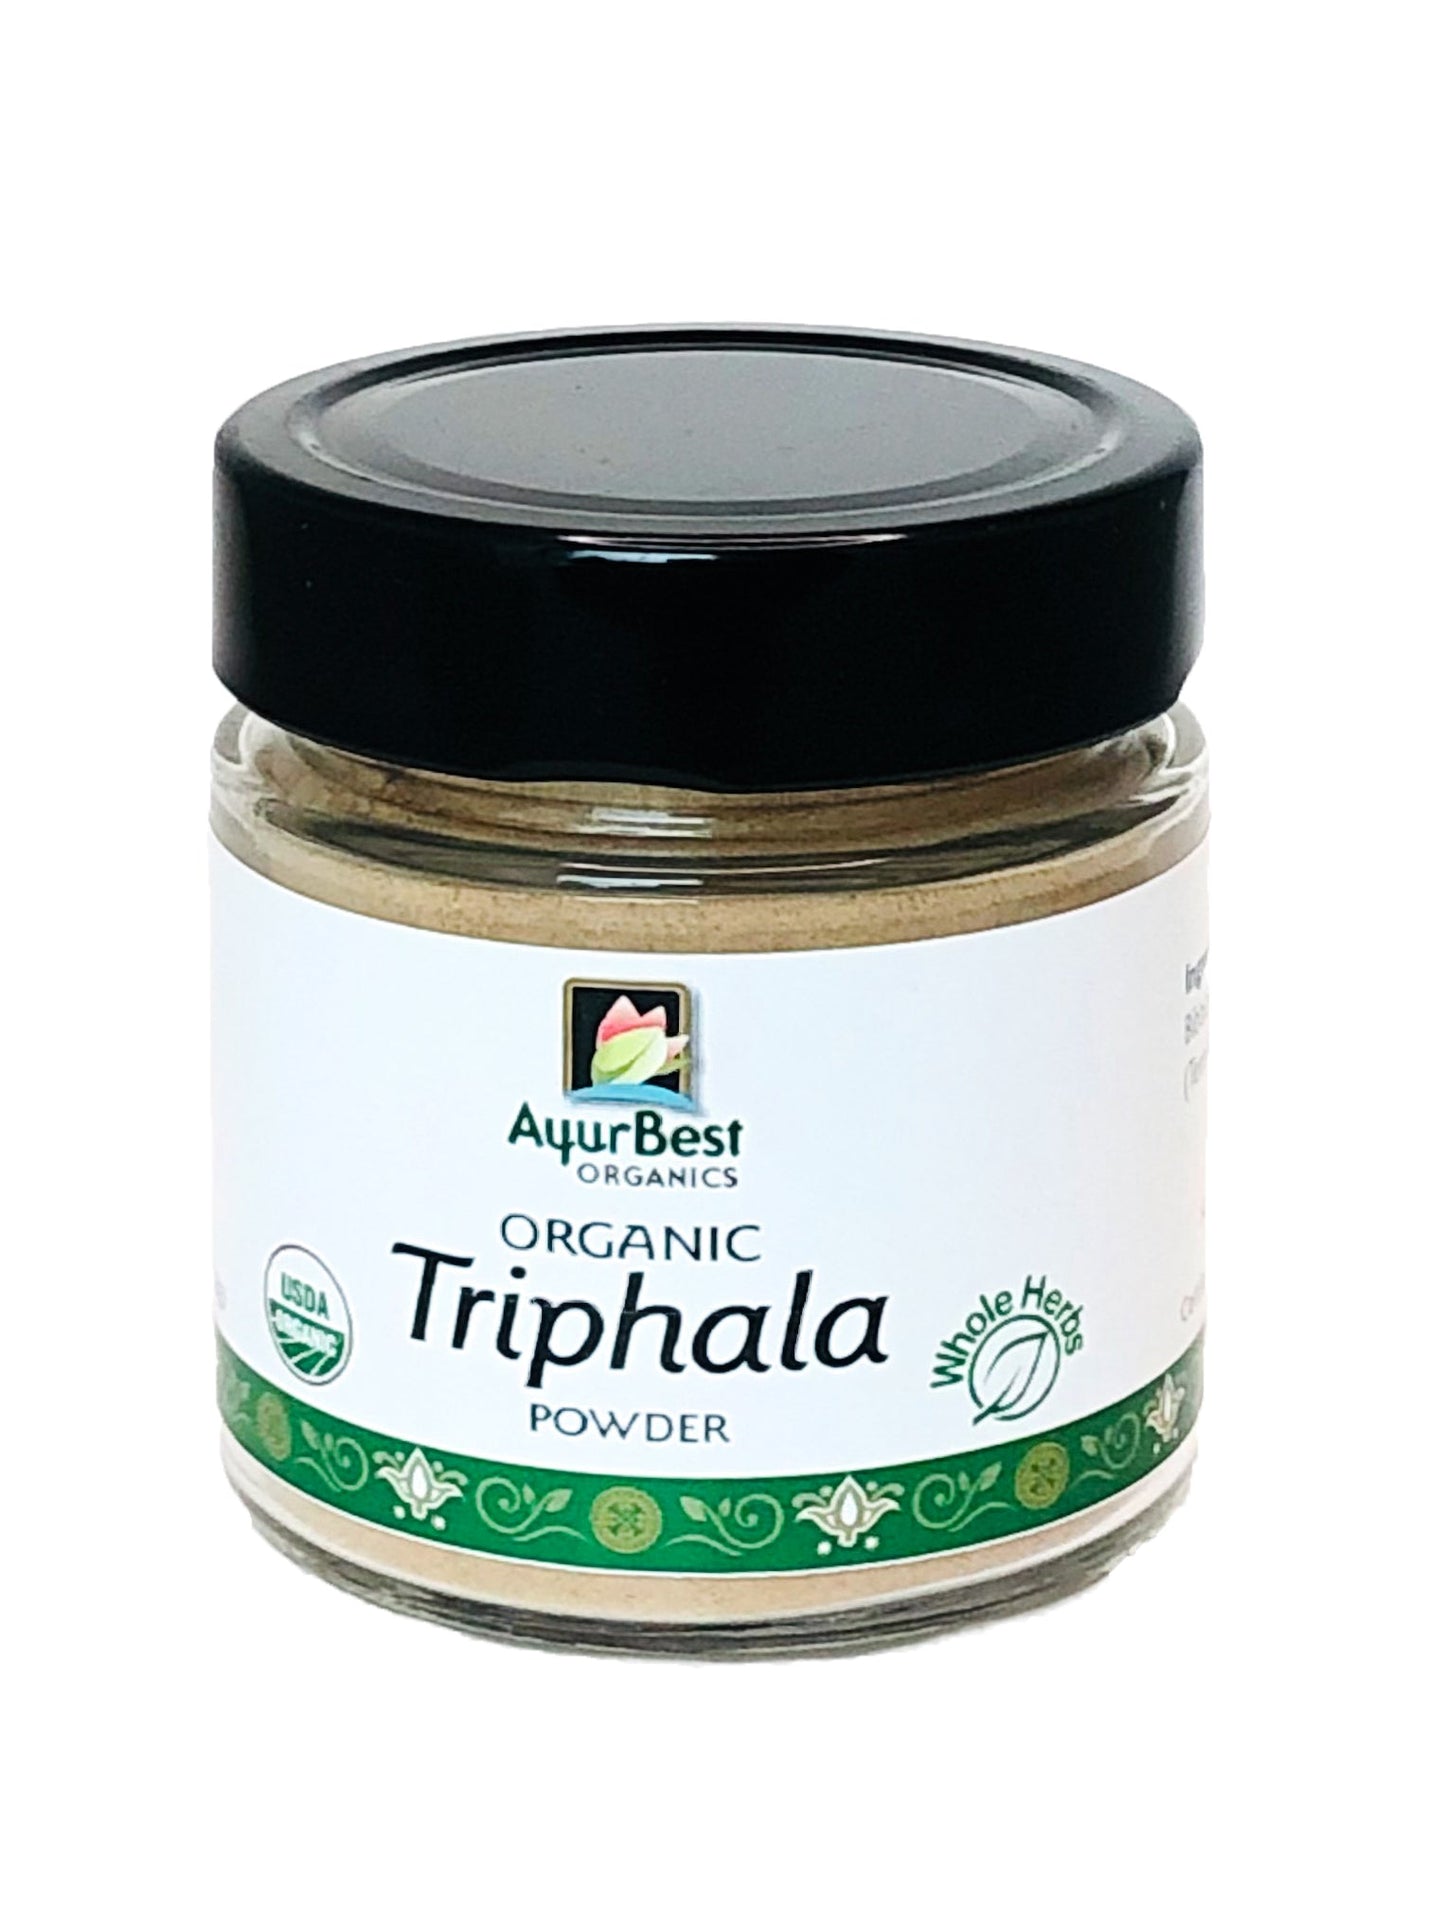 Wholesale Spices & Herbs - Triphala Powder, Organic 5 oz (143g) Jar